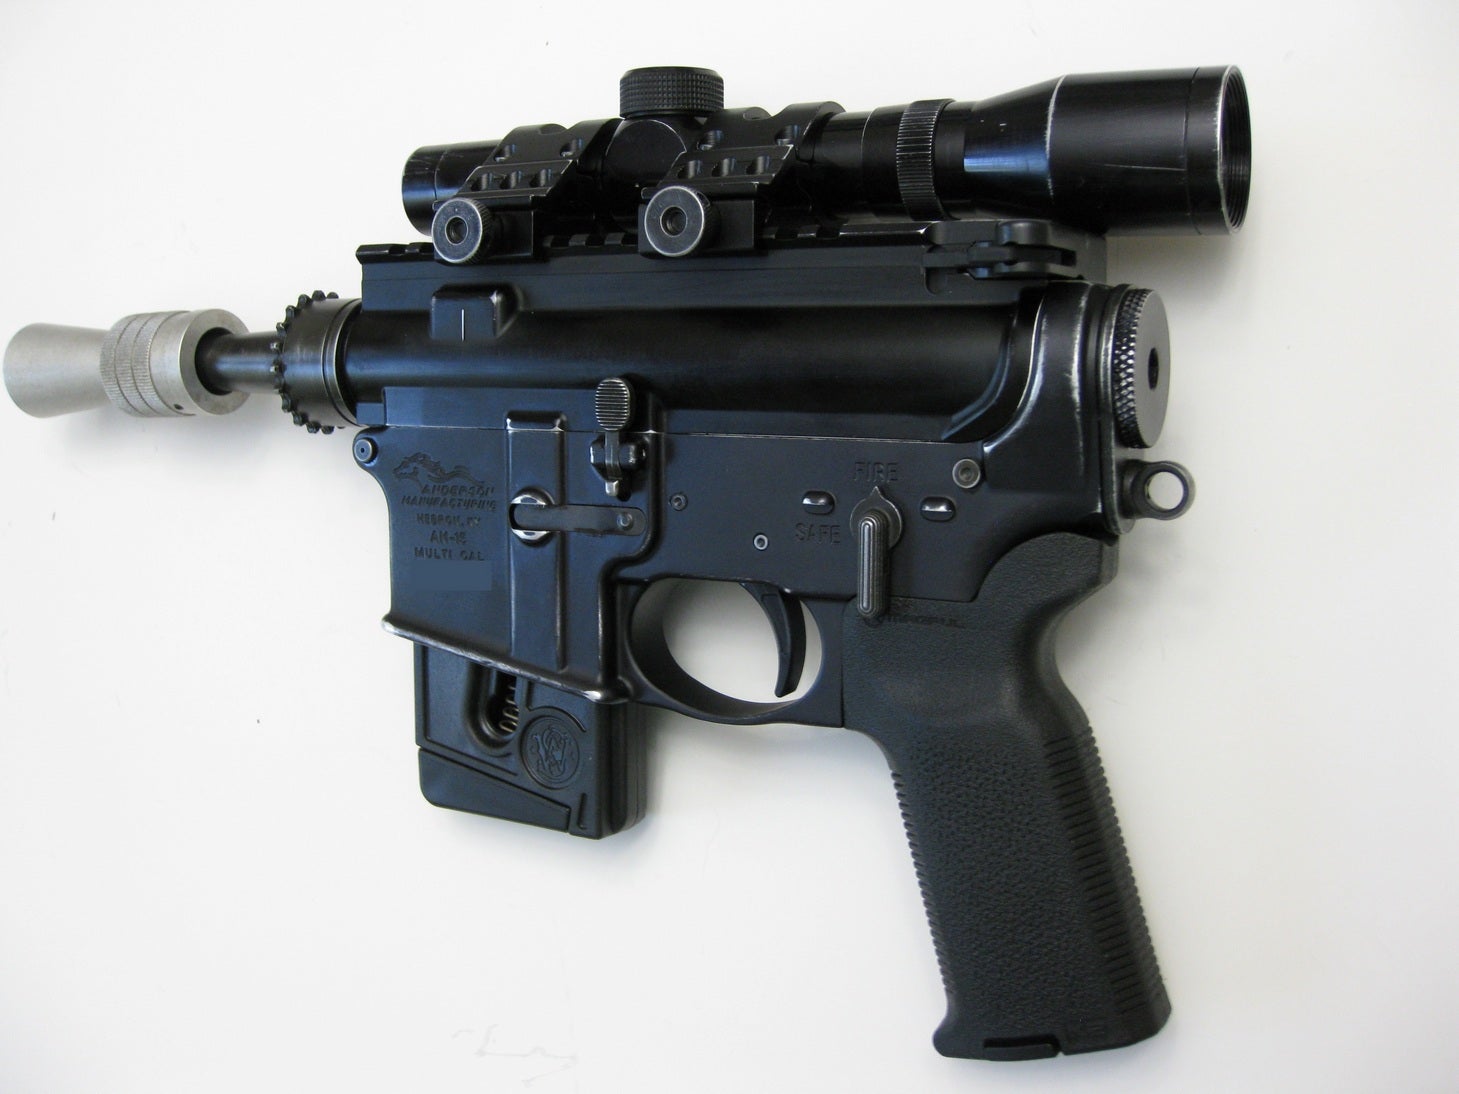 Safe Does Not Shoot Custom Designed BlasTech DL-44 Heavy Blaster Pistol With Functional Moving Trigger 